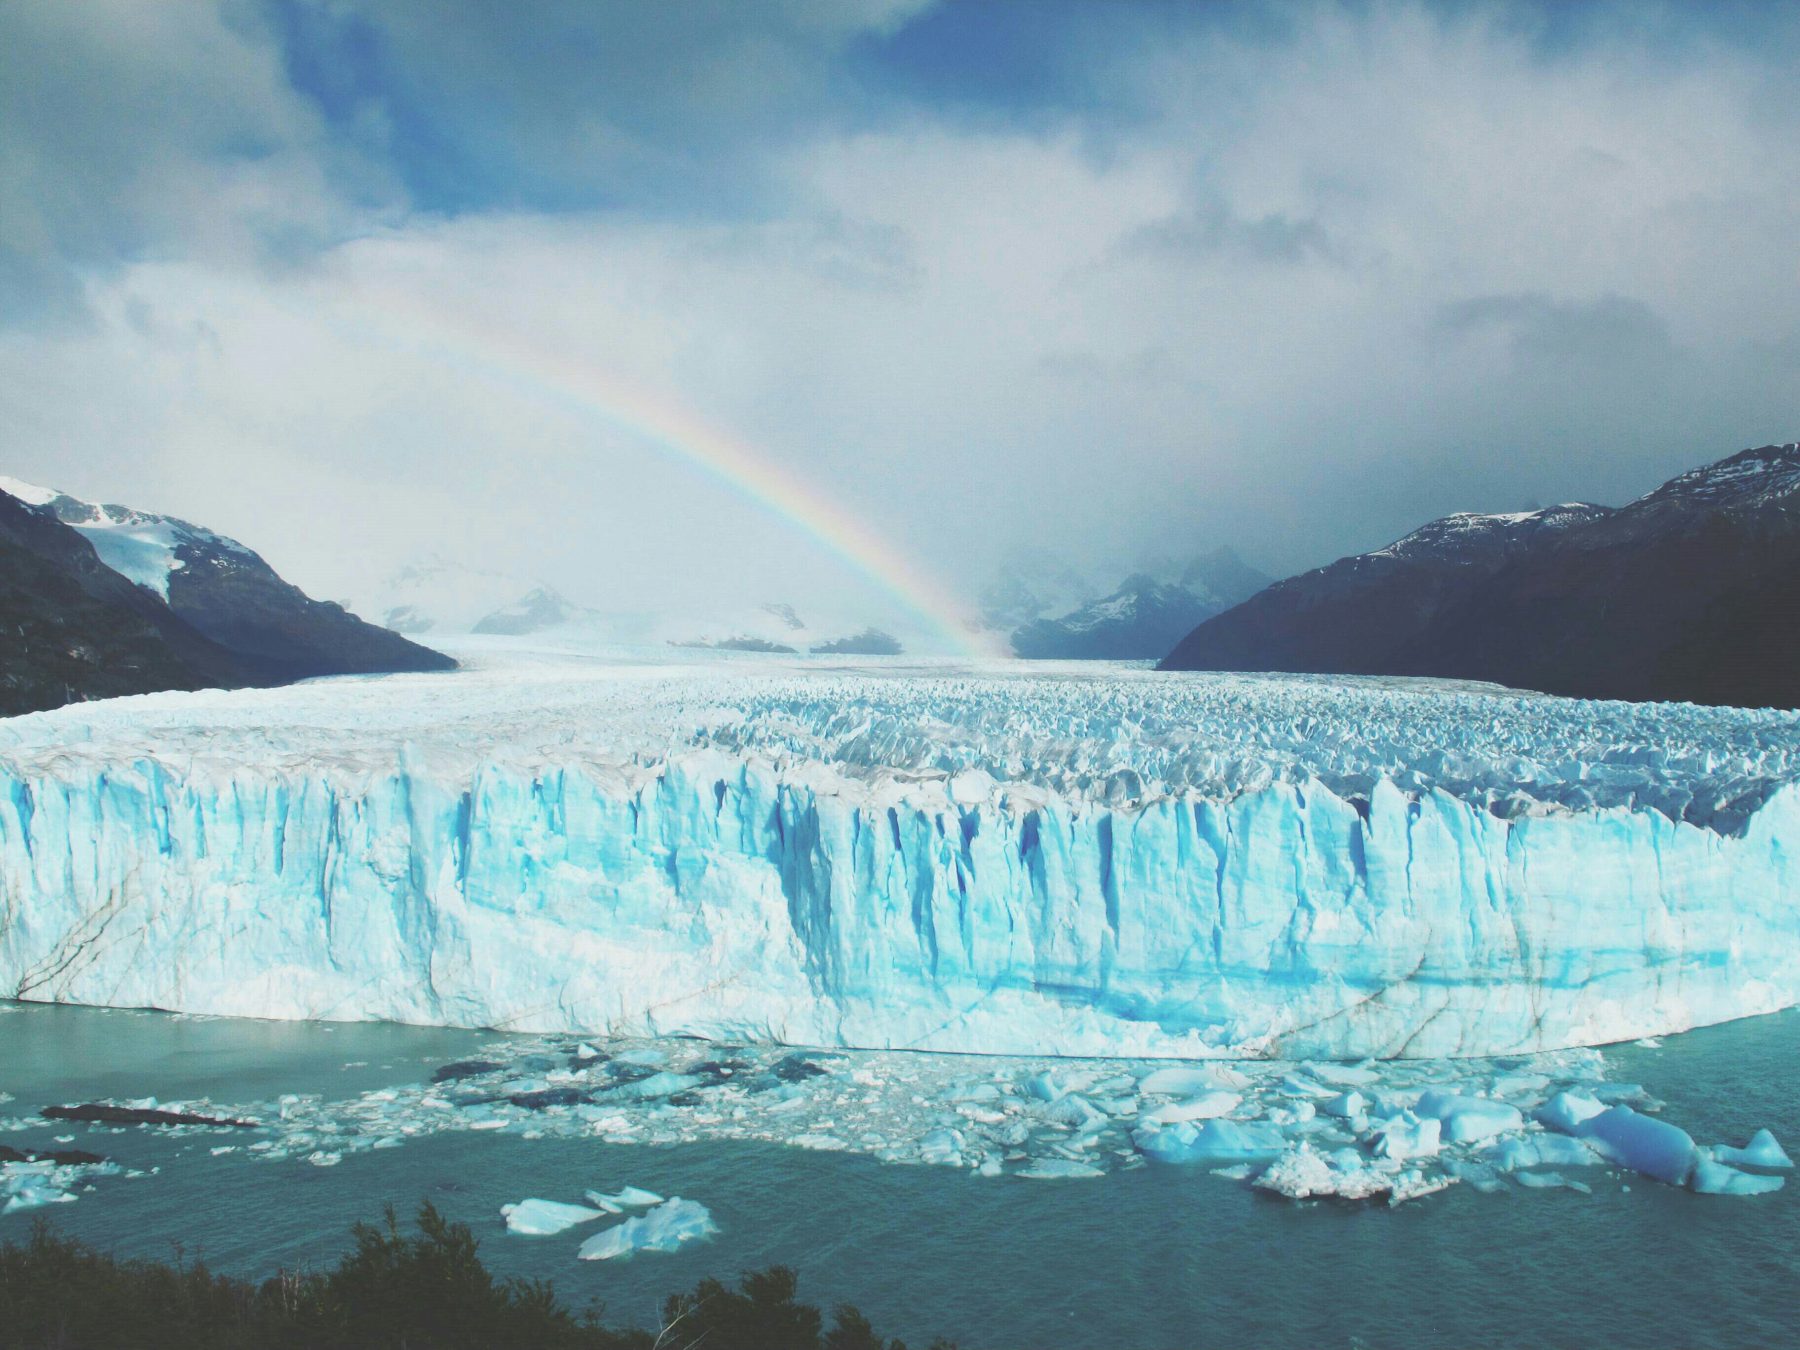 Patagonie Argentine, le glacier Perito Moreno